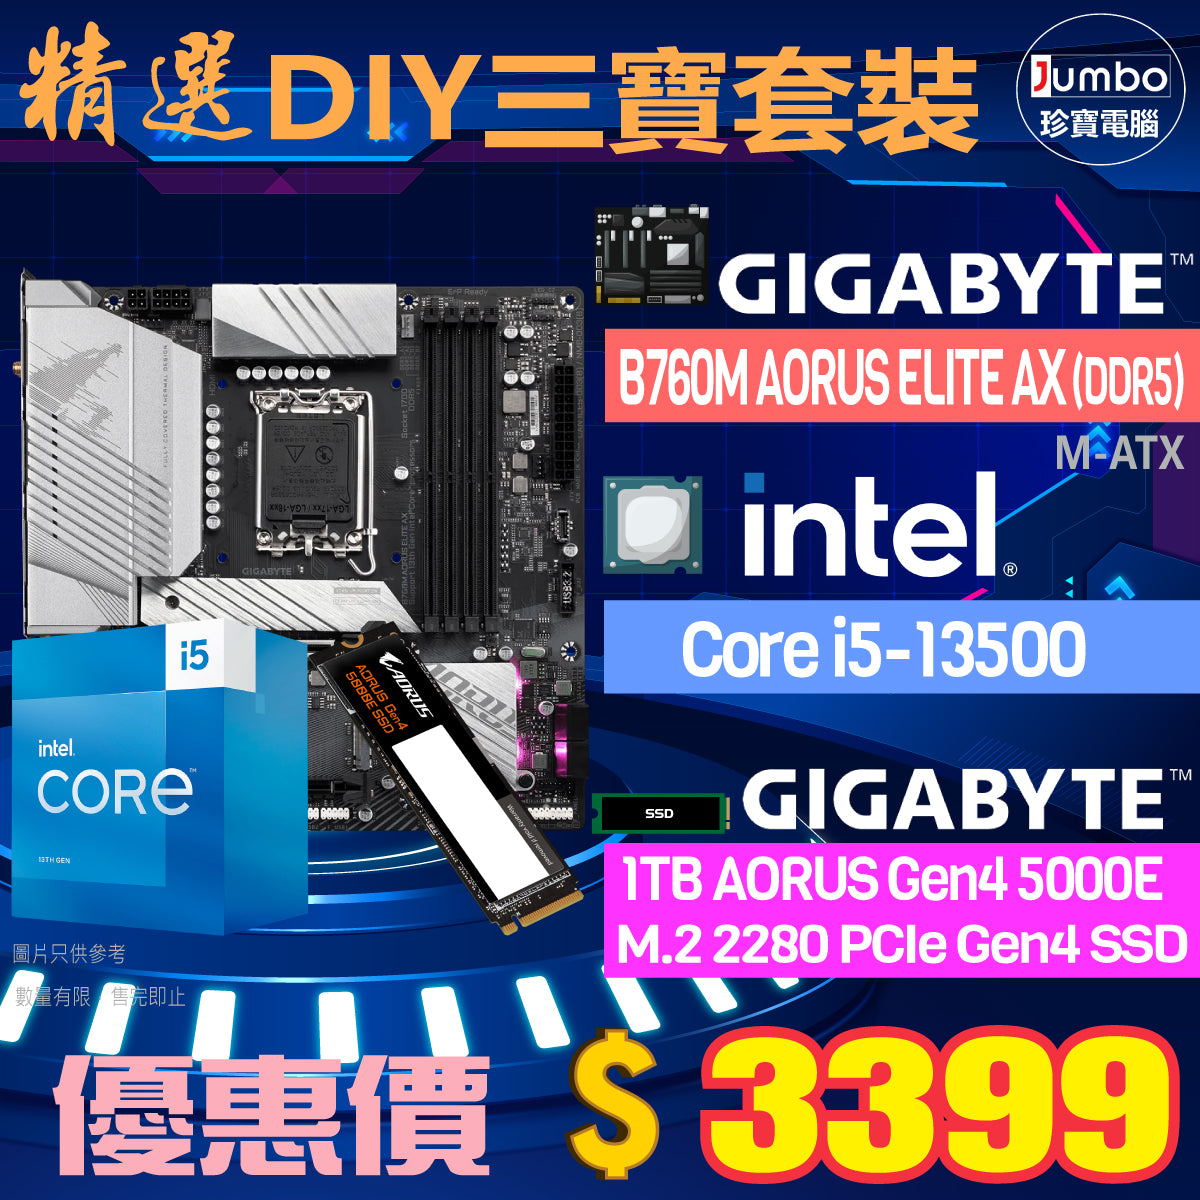 [限時購] GIGABYTE B760M AORUS ELITE AX (DDR5) + Intel i5-13500 + GIGABYTE 1TB Aorus Gen4 5000E M.2 PCIe SSD